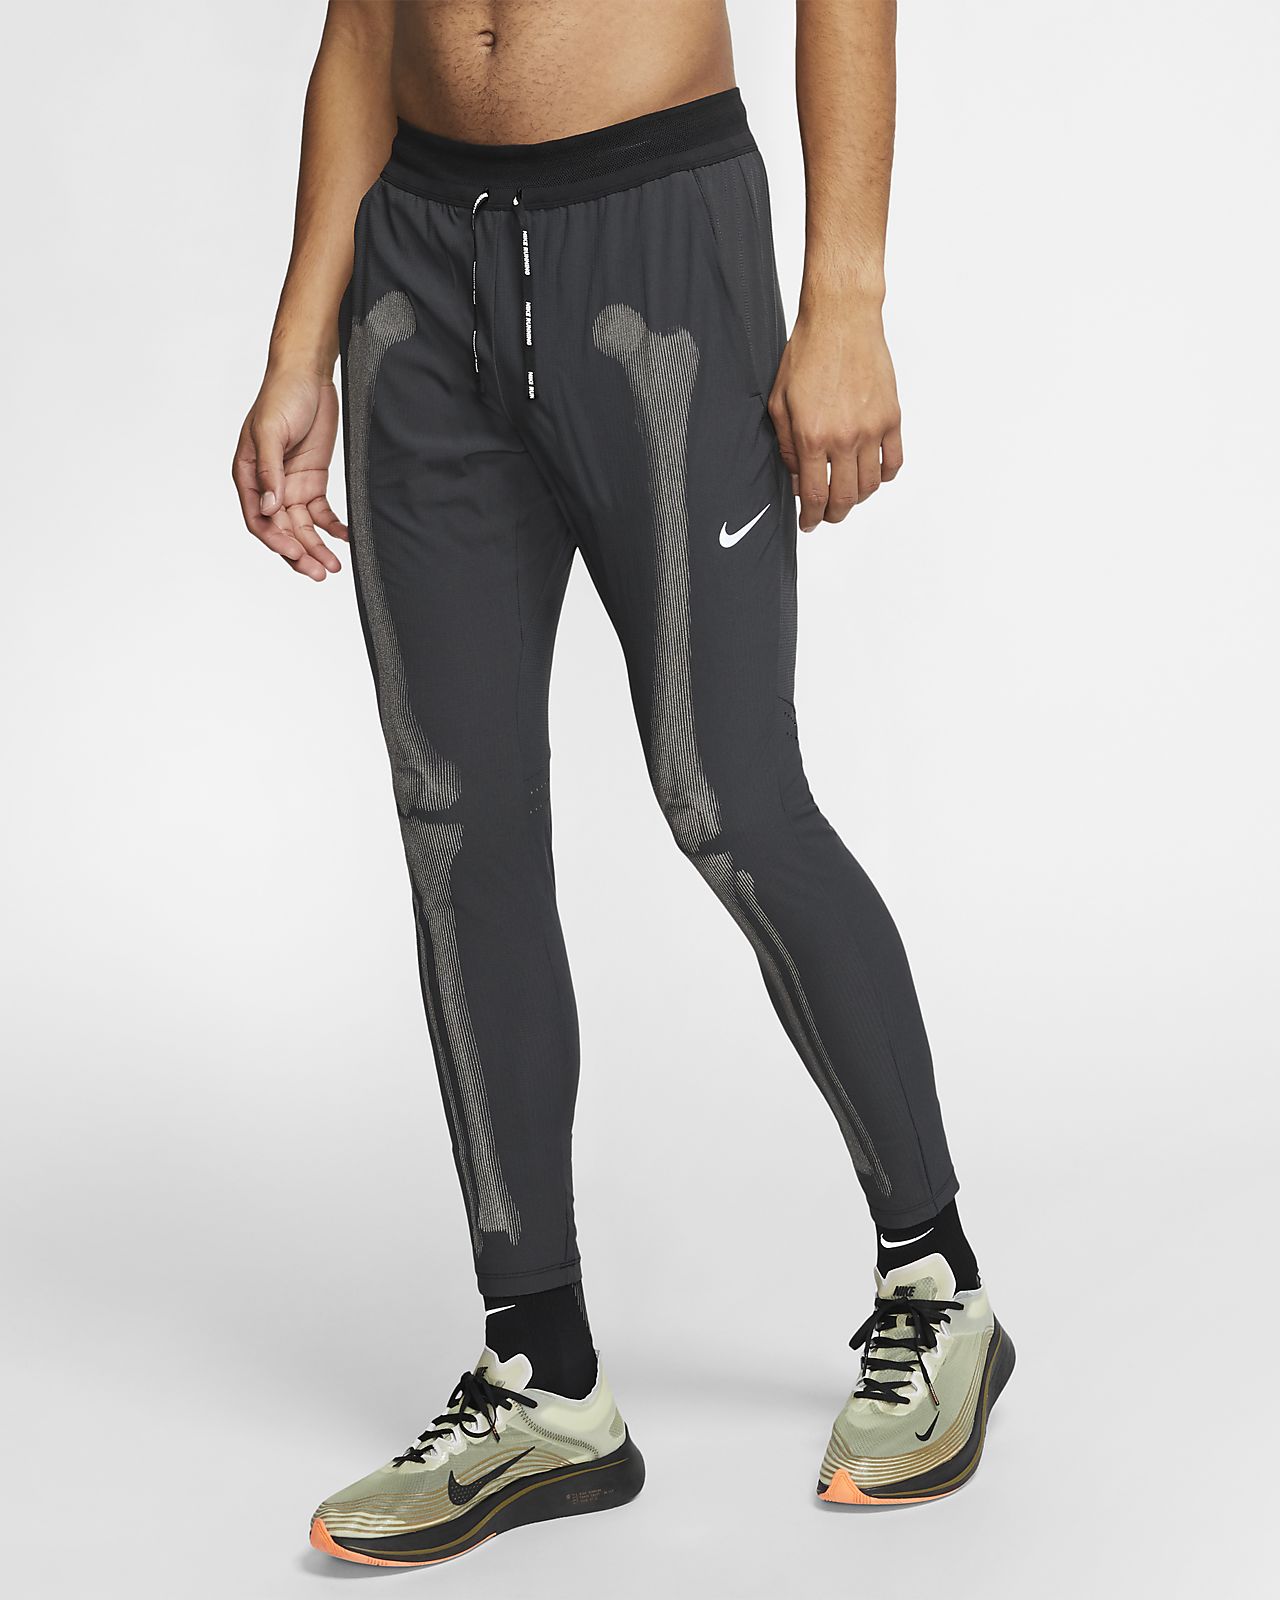 Simple Nike Skeleton Workout Pants for Burn Fat fast